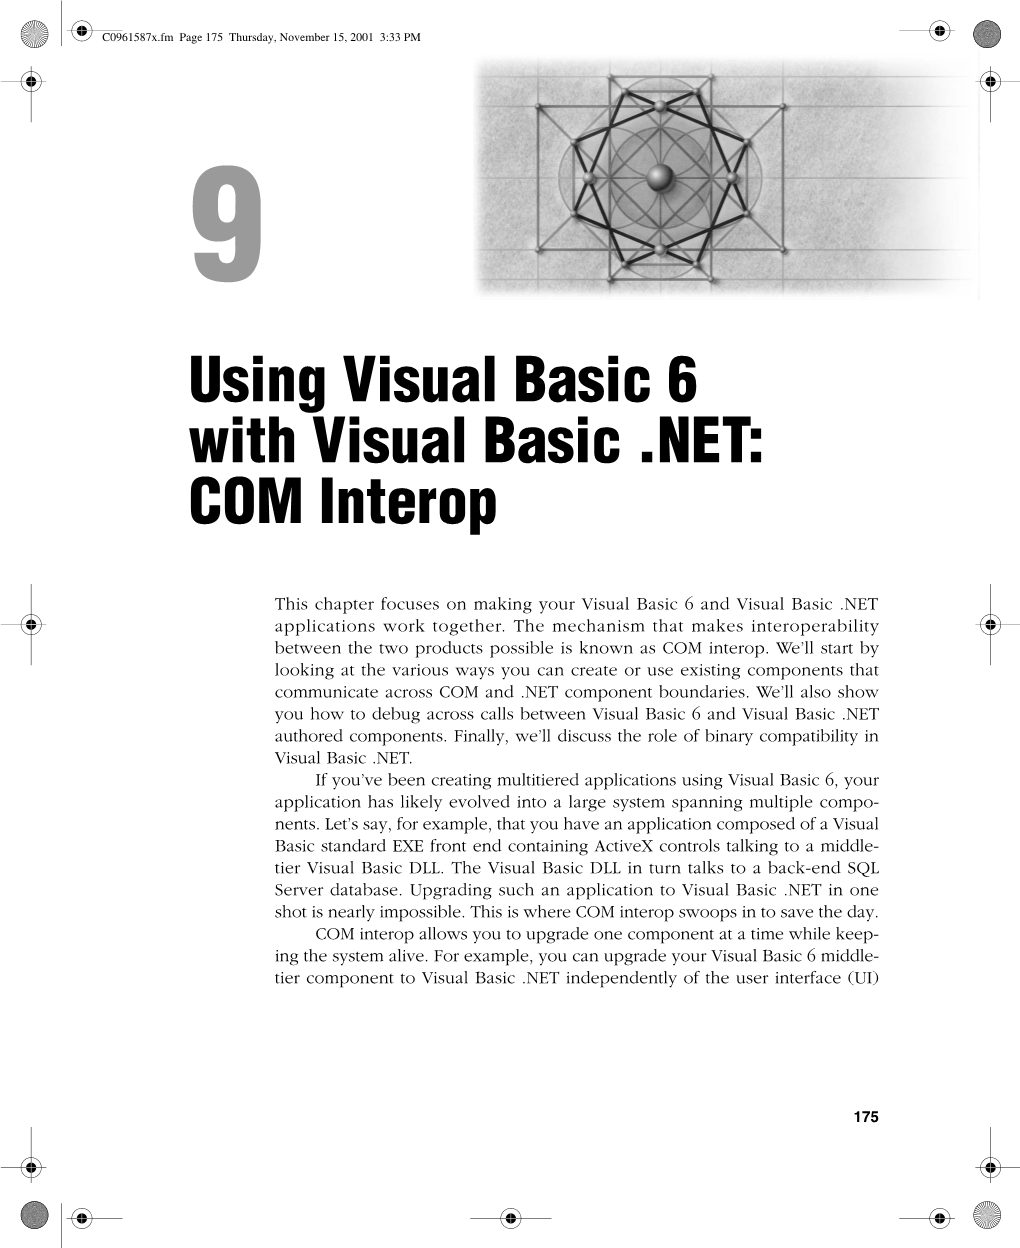 Using Visual Basic 6 with Visual Basic .NET: COM Interop